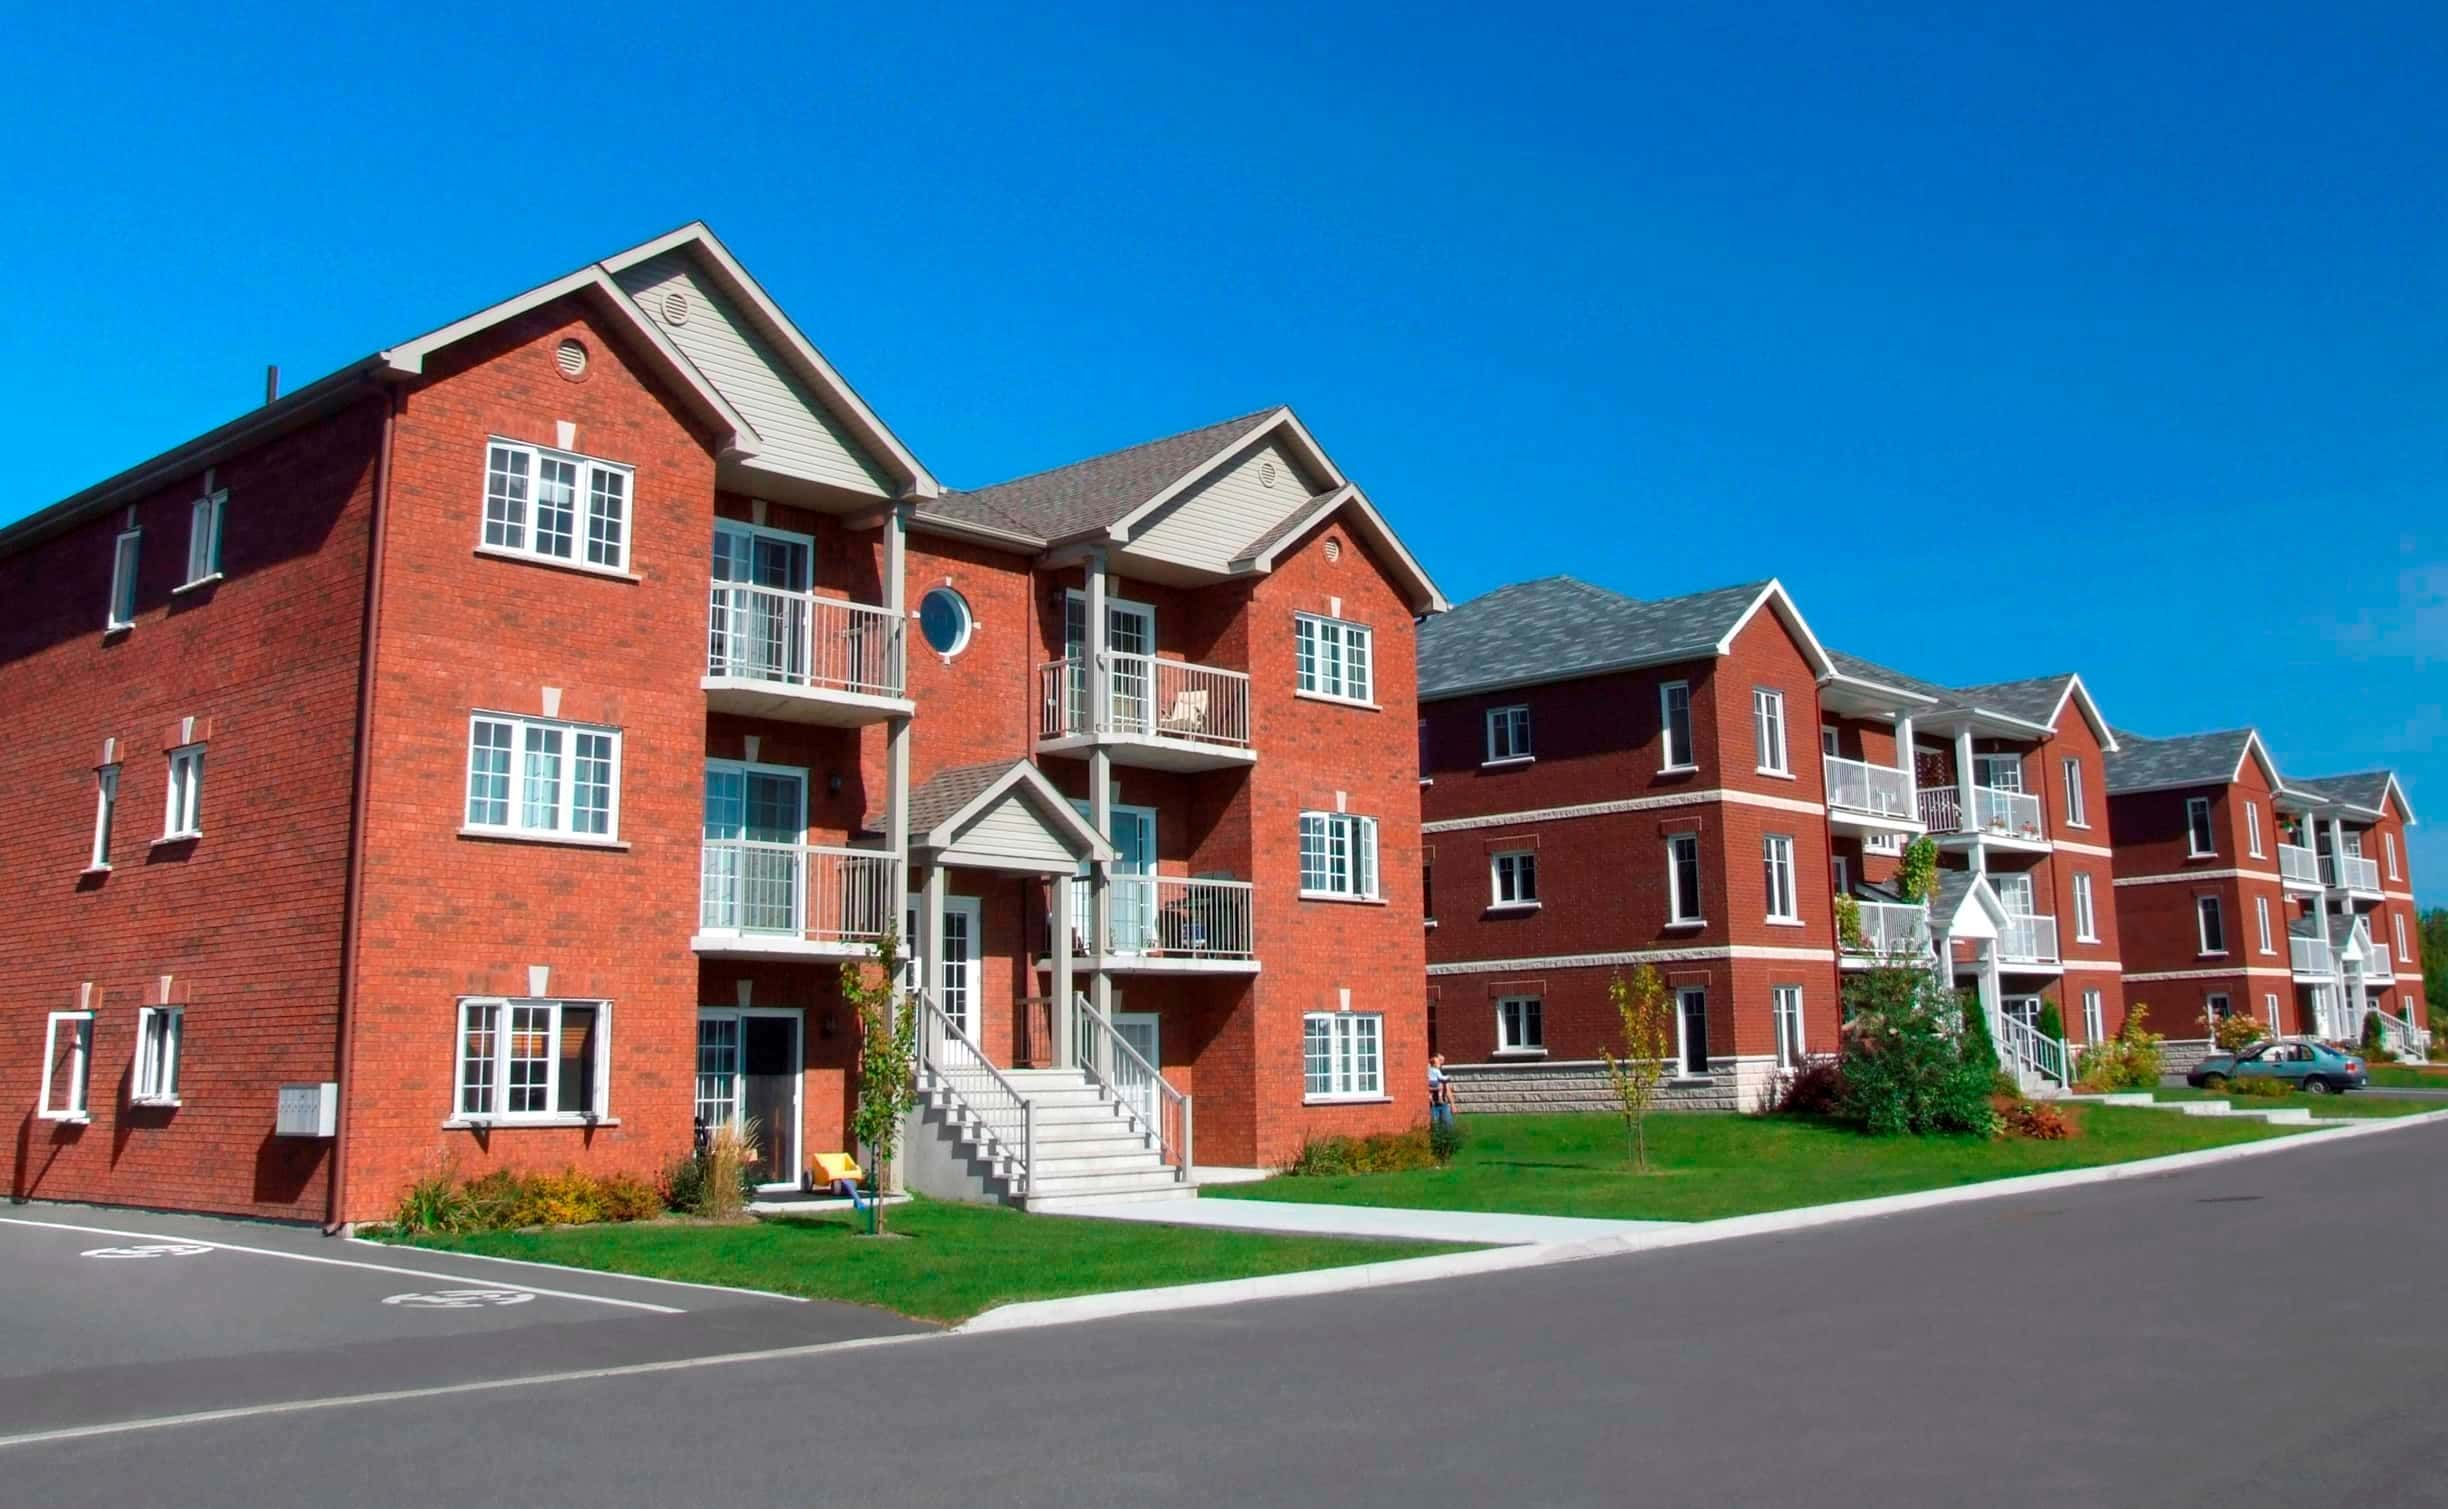 Senior Housing and community Housing options